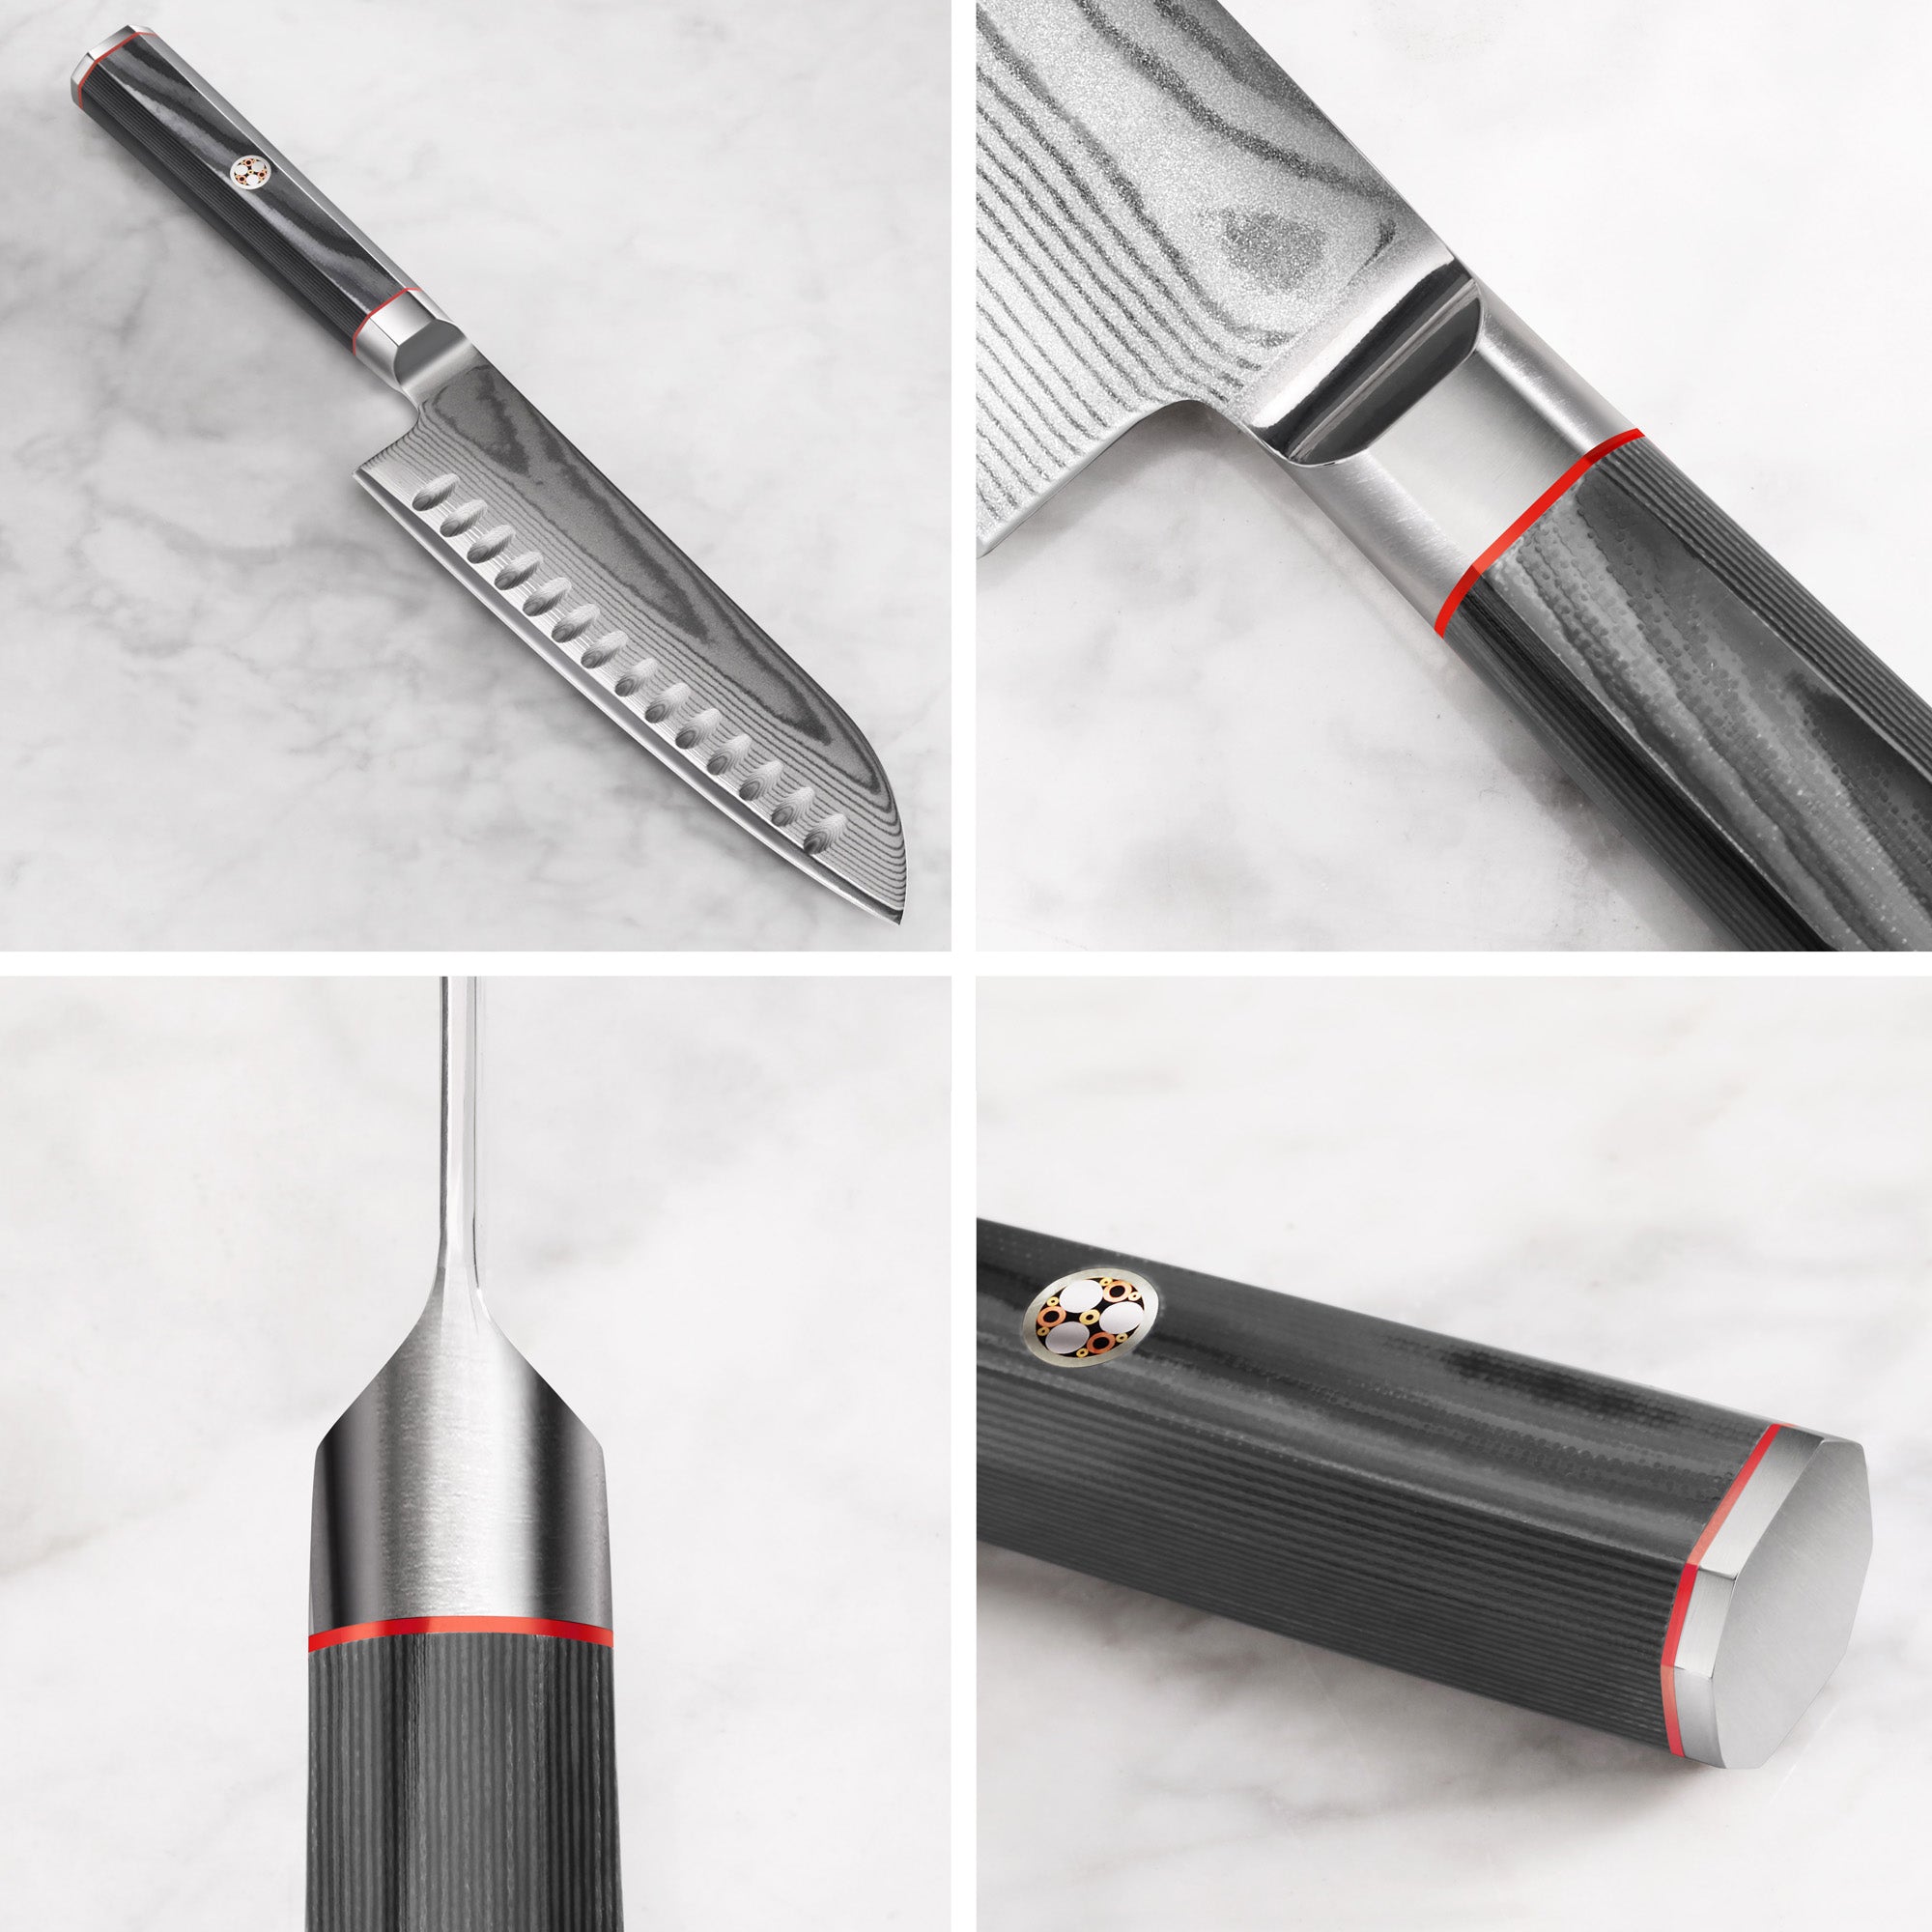 YARI Series 7-Inch Santoku Knife with Sheath, X-7 Damascus Steel, 501240